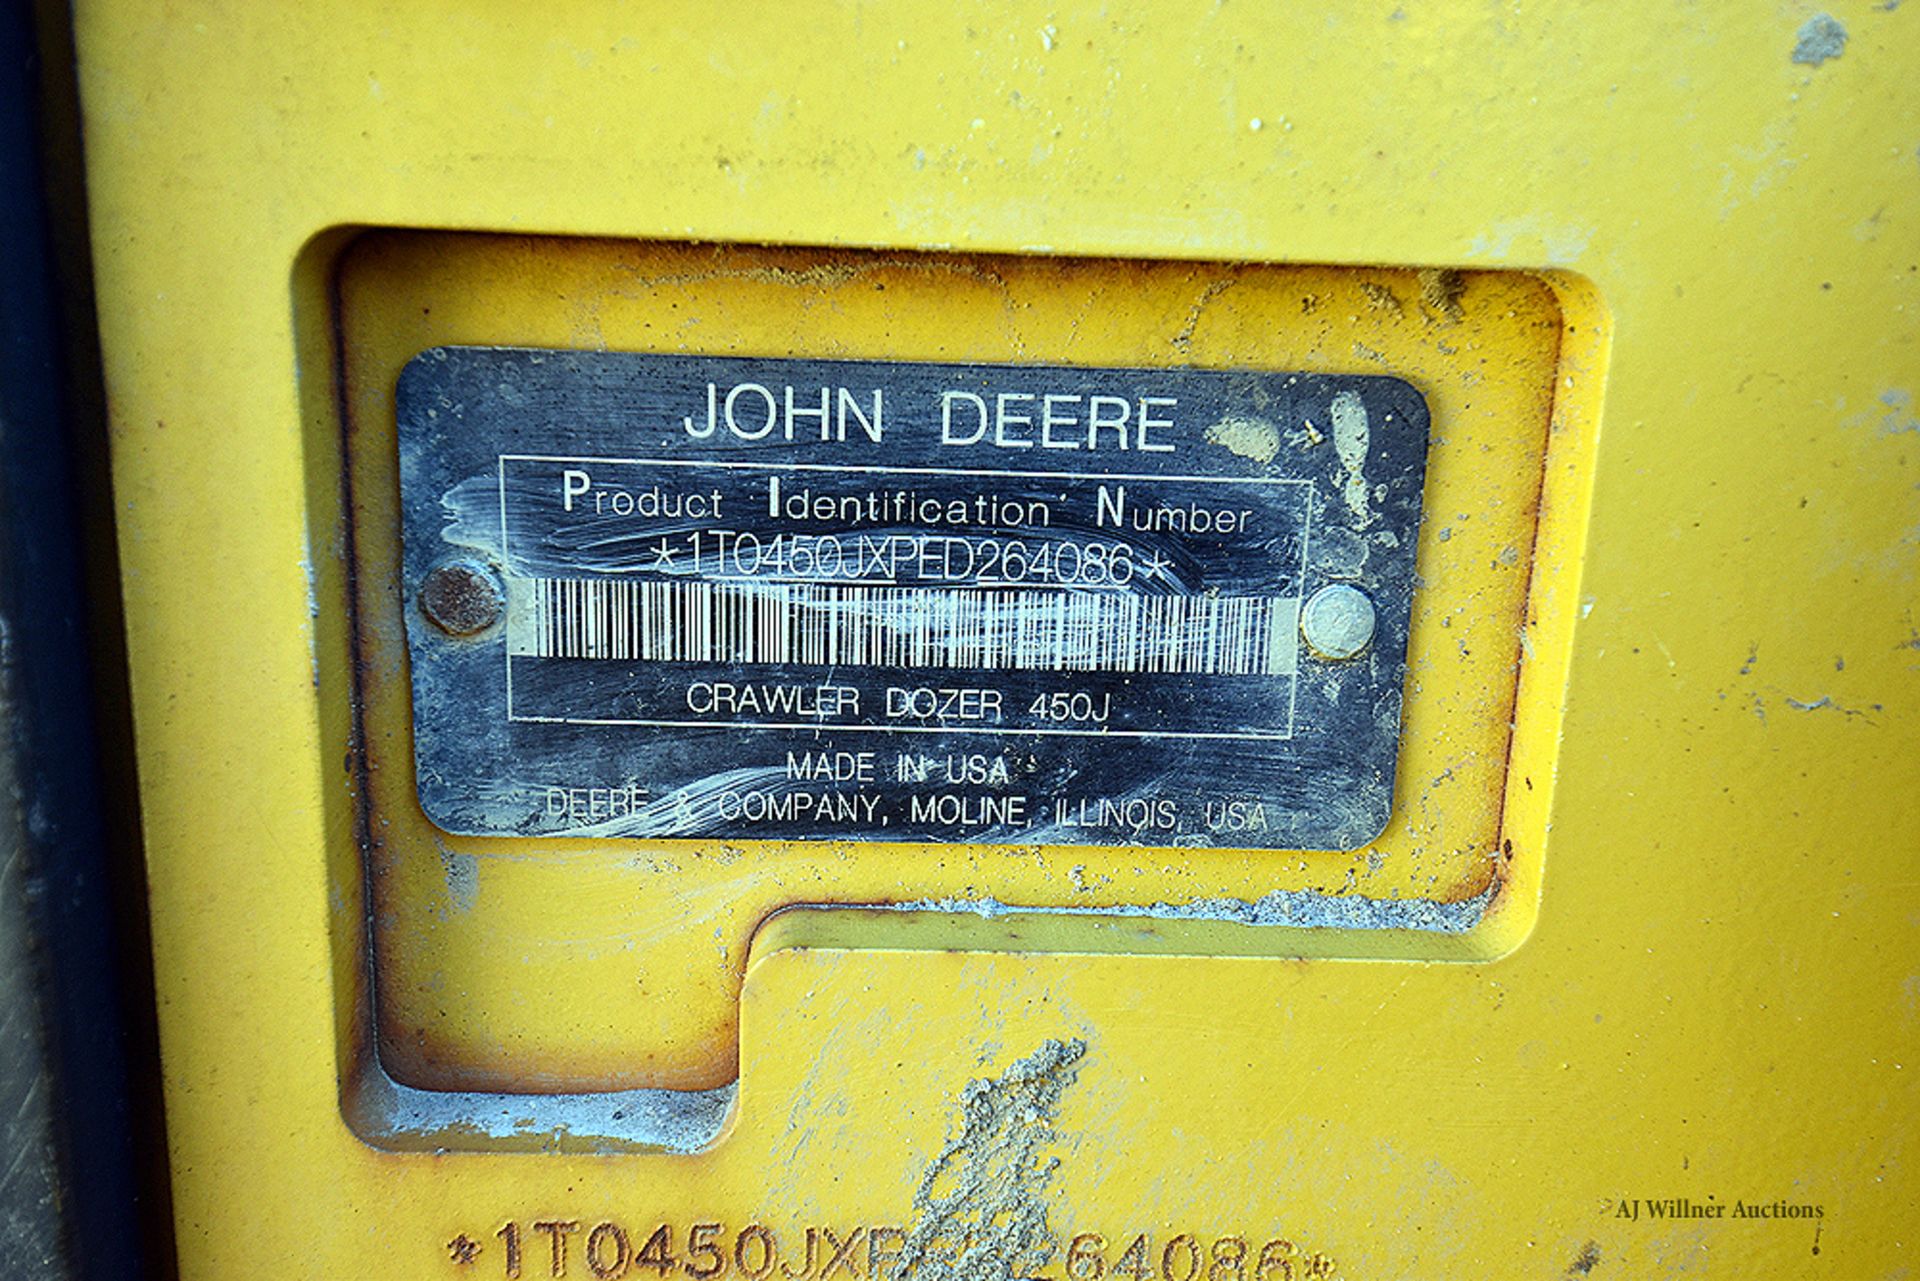 2014 John Deere Model 450J LGP Crawler Dozer 869.6 Hours Indicated w/EROPS and 6 Way Blade - Image 6 of 6